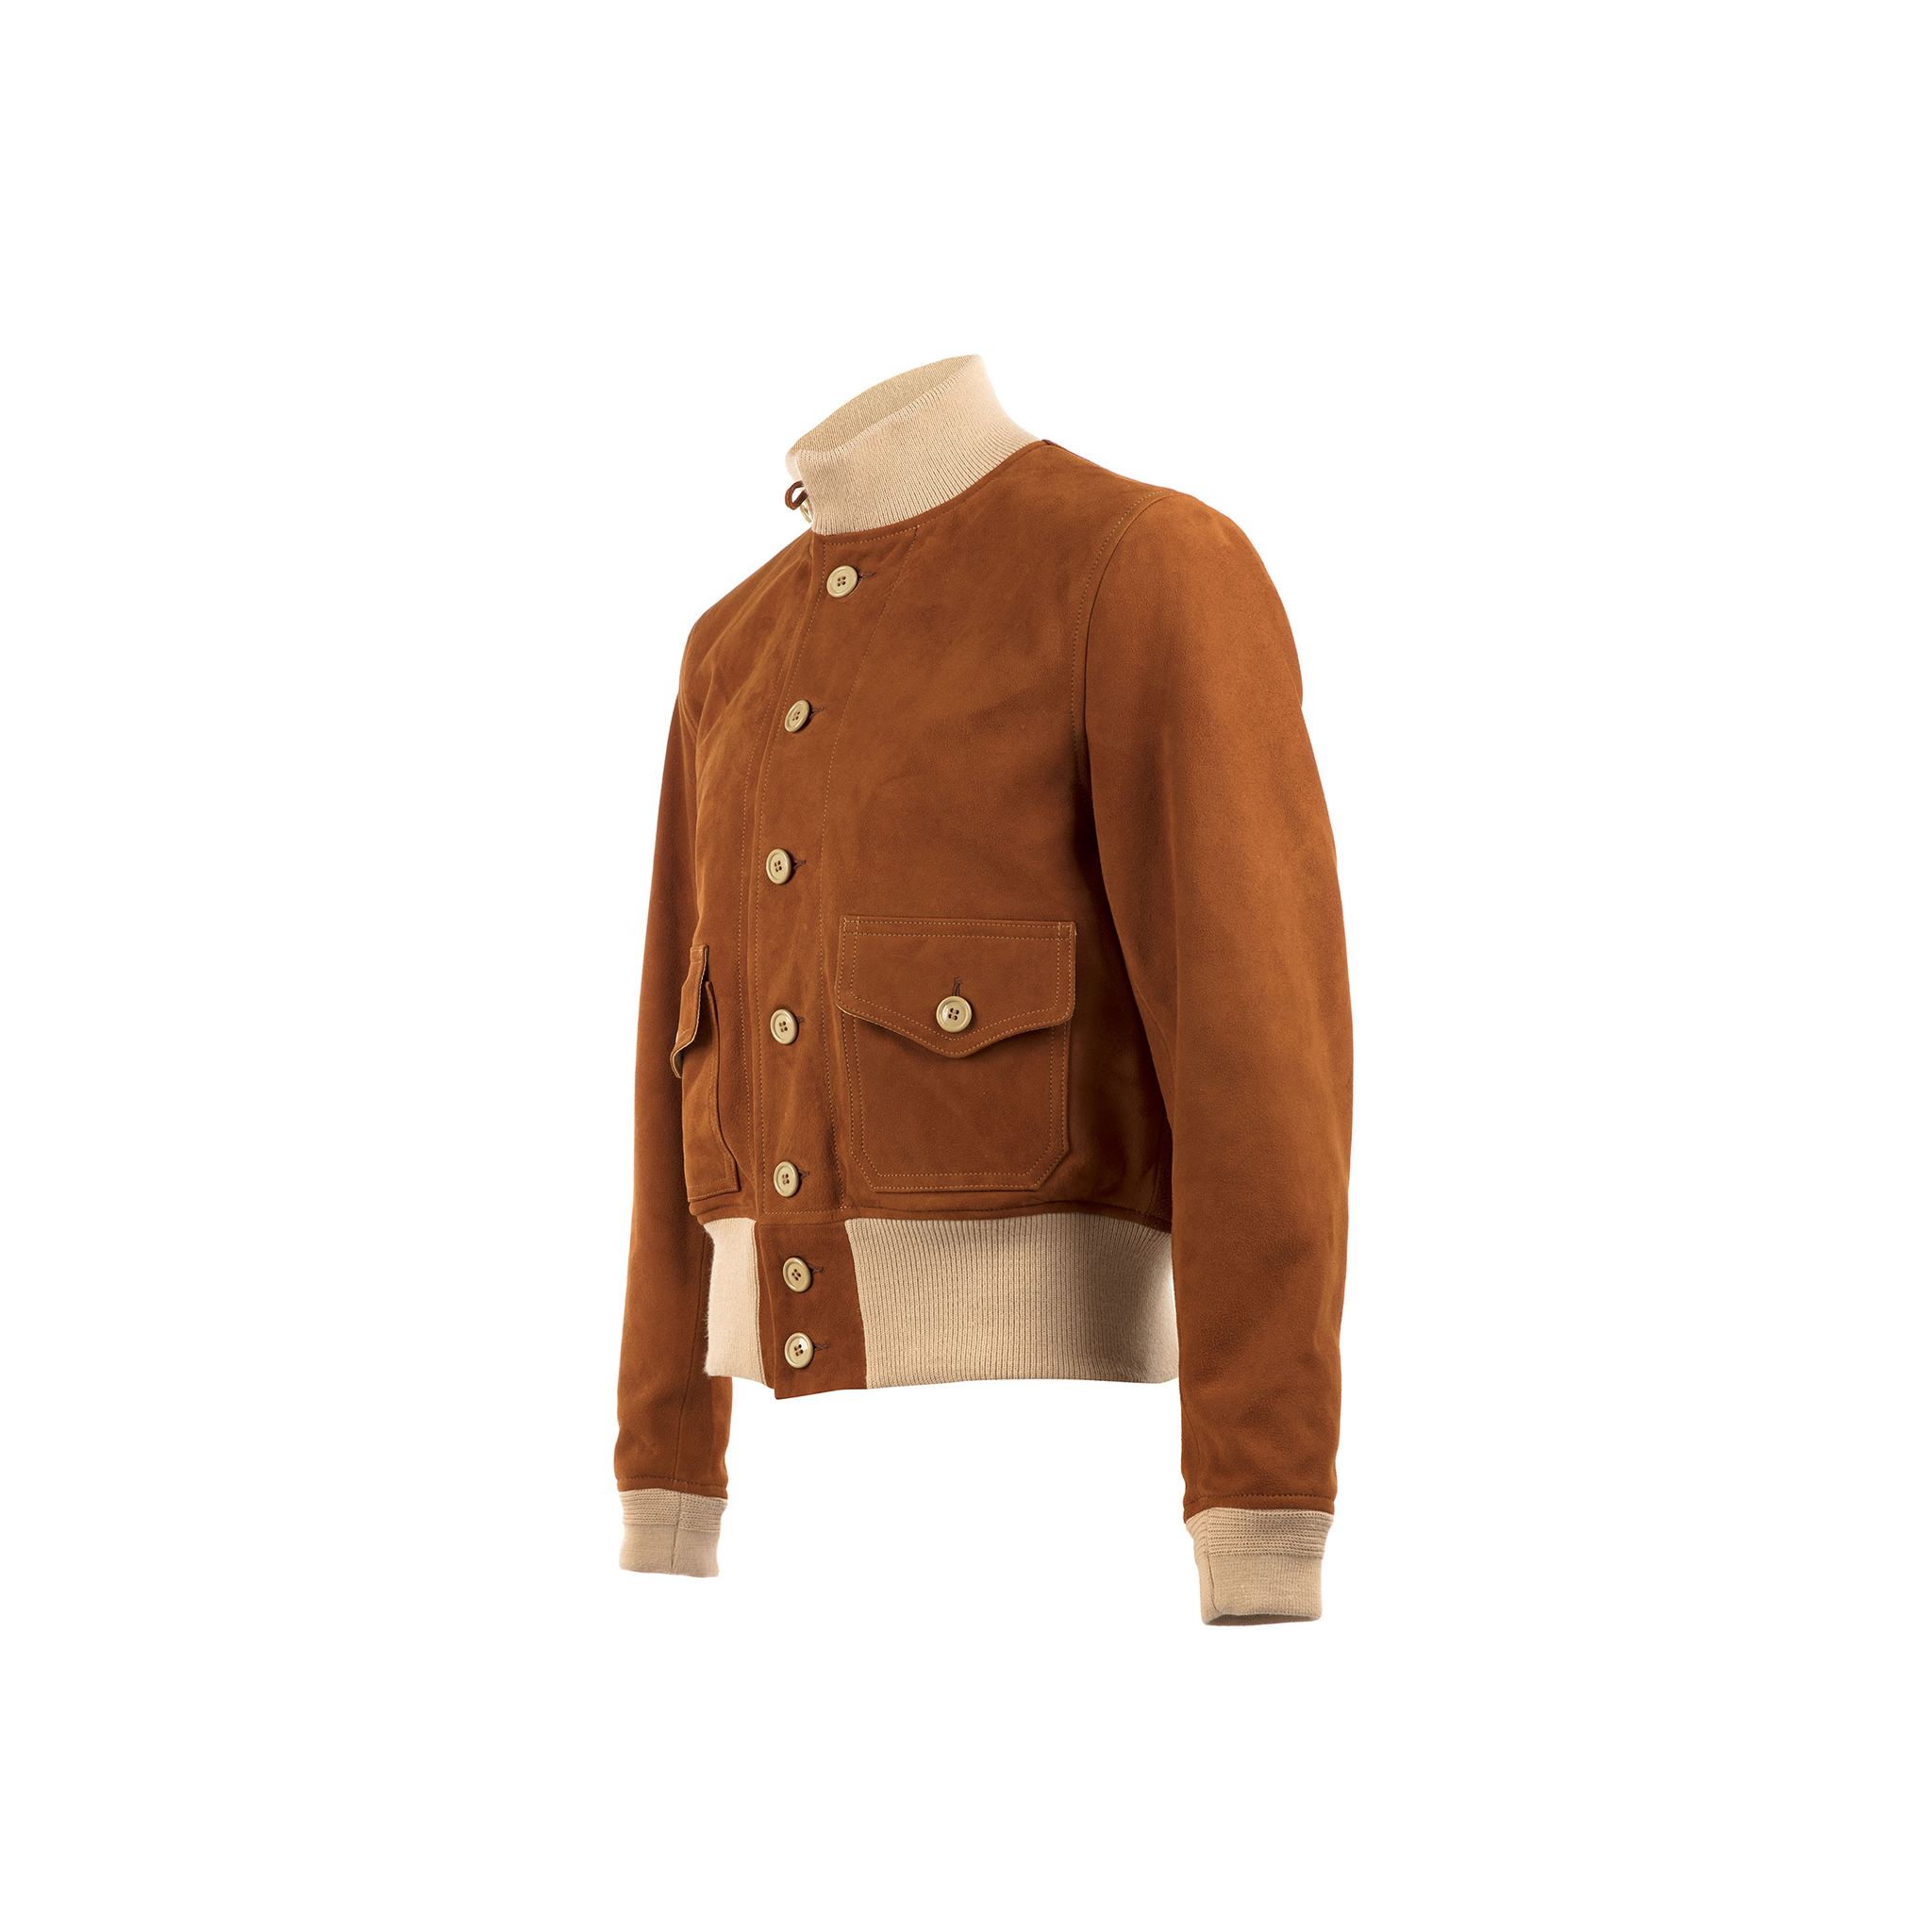 A1 Short Version Jacket - Suede leather - Suzy color